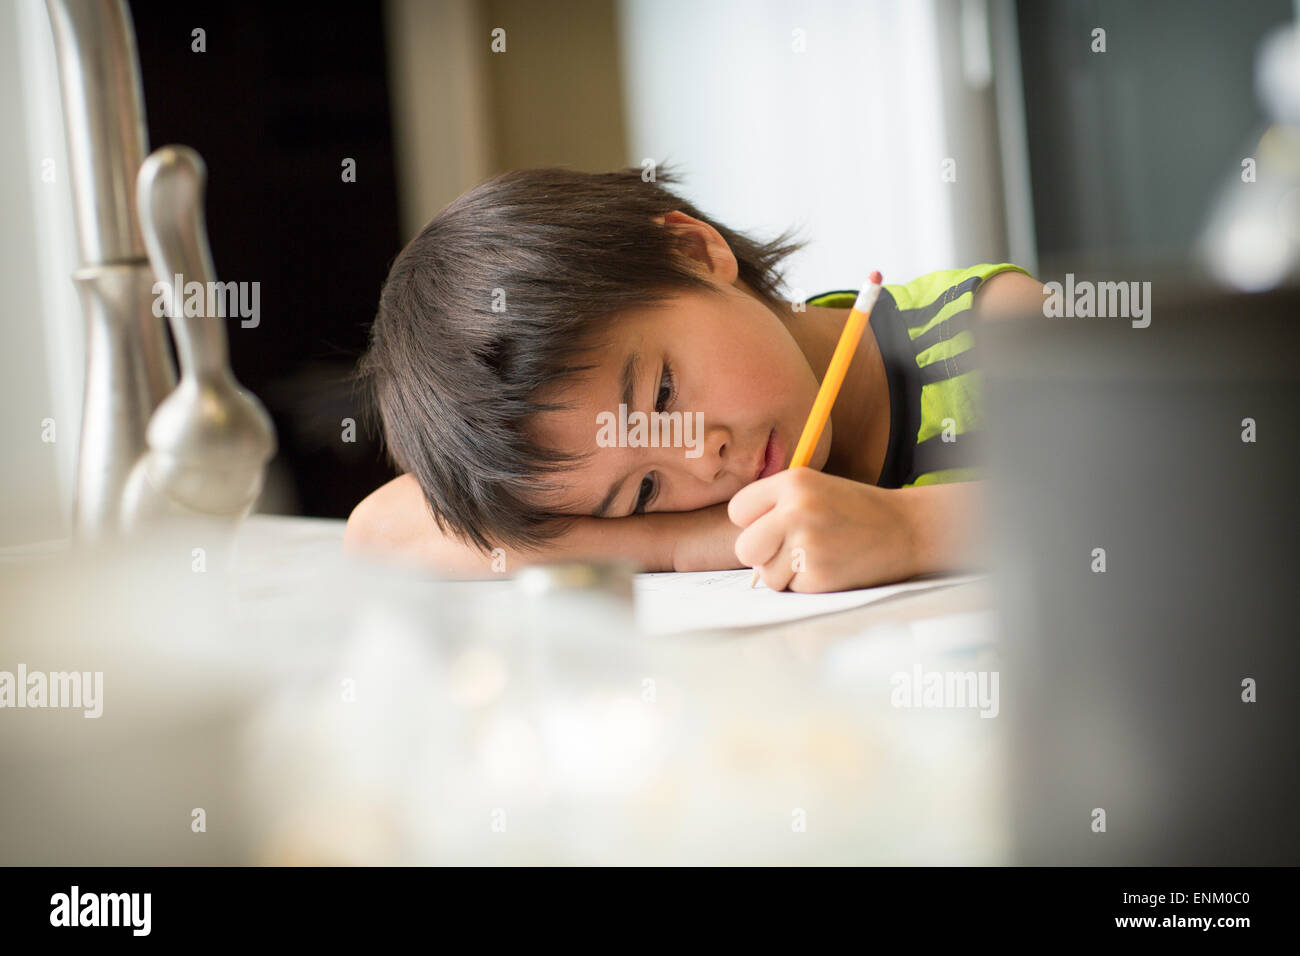 A Japanese boy studies Japanese homework in a kitchen. Stock Photo